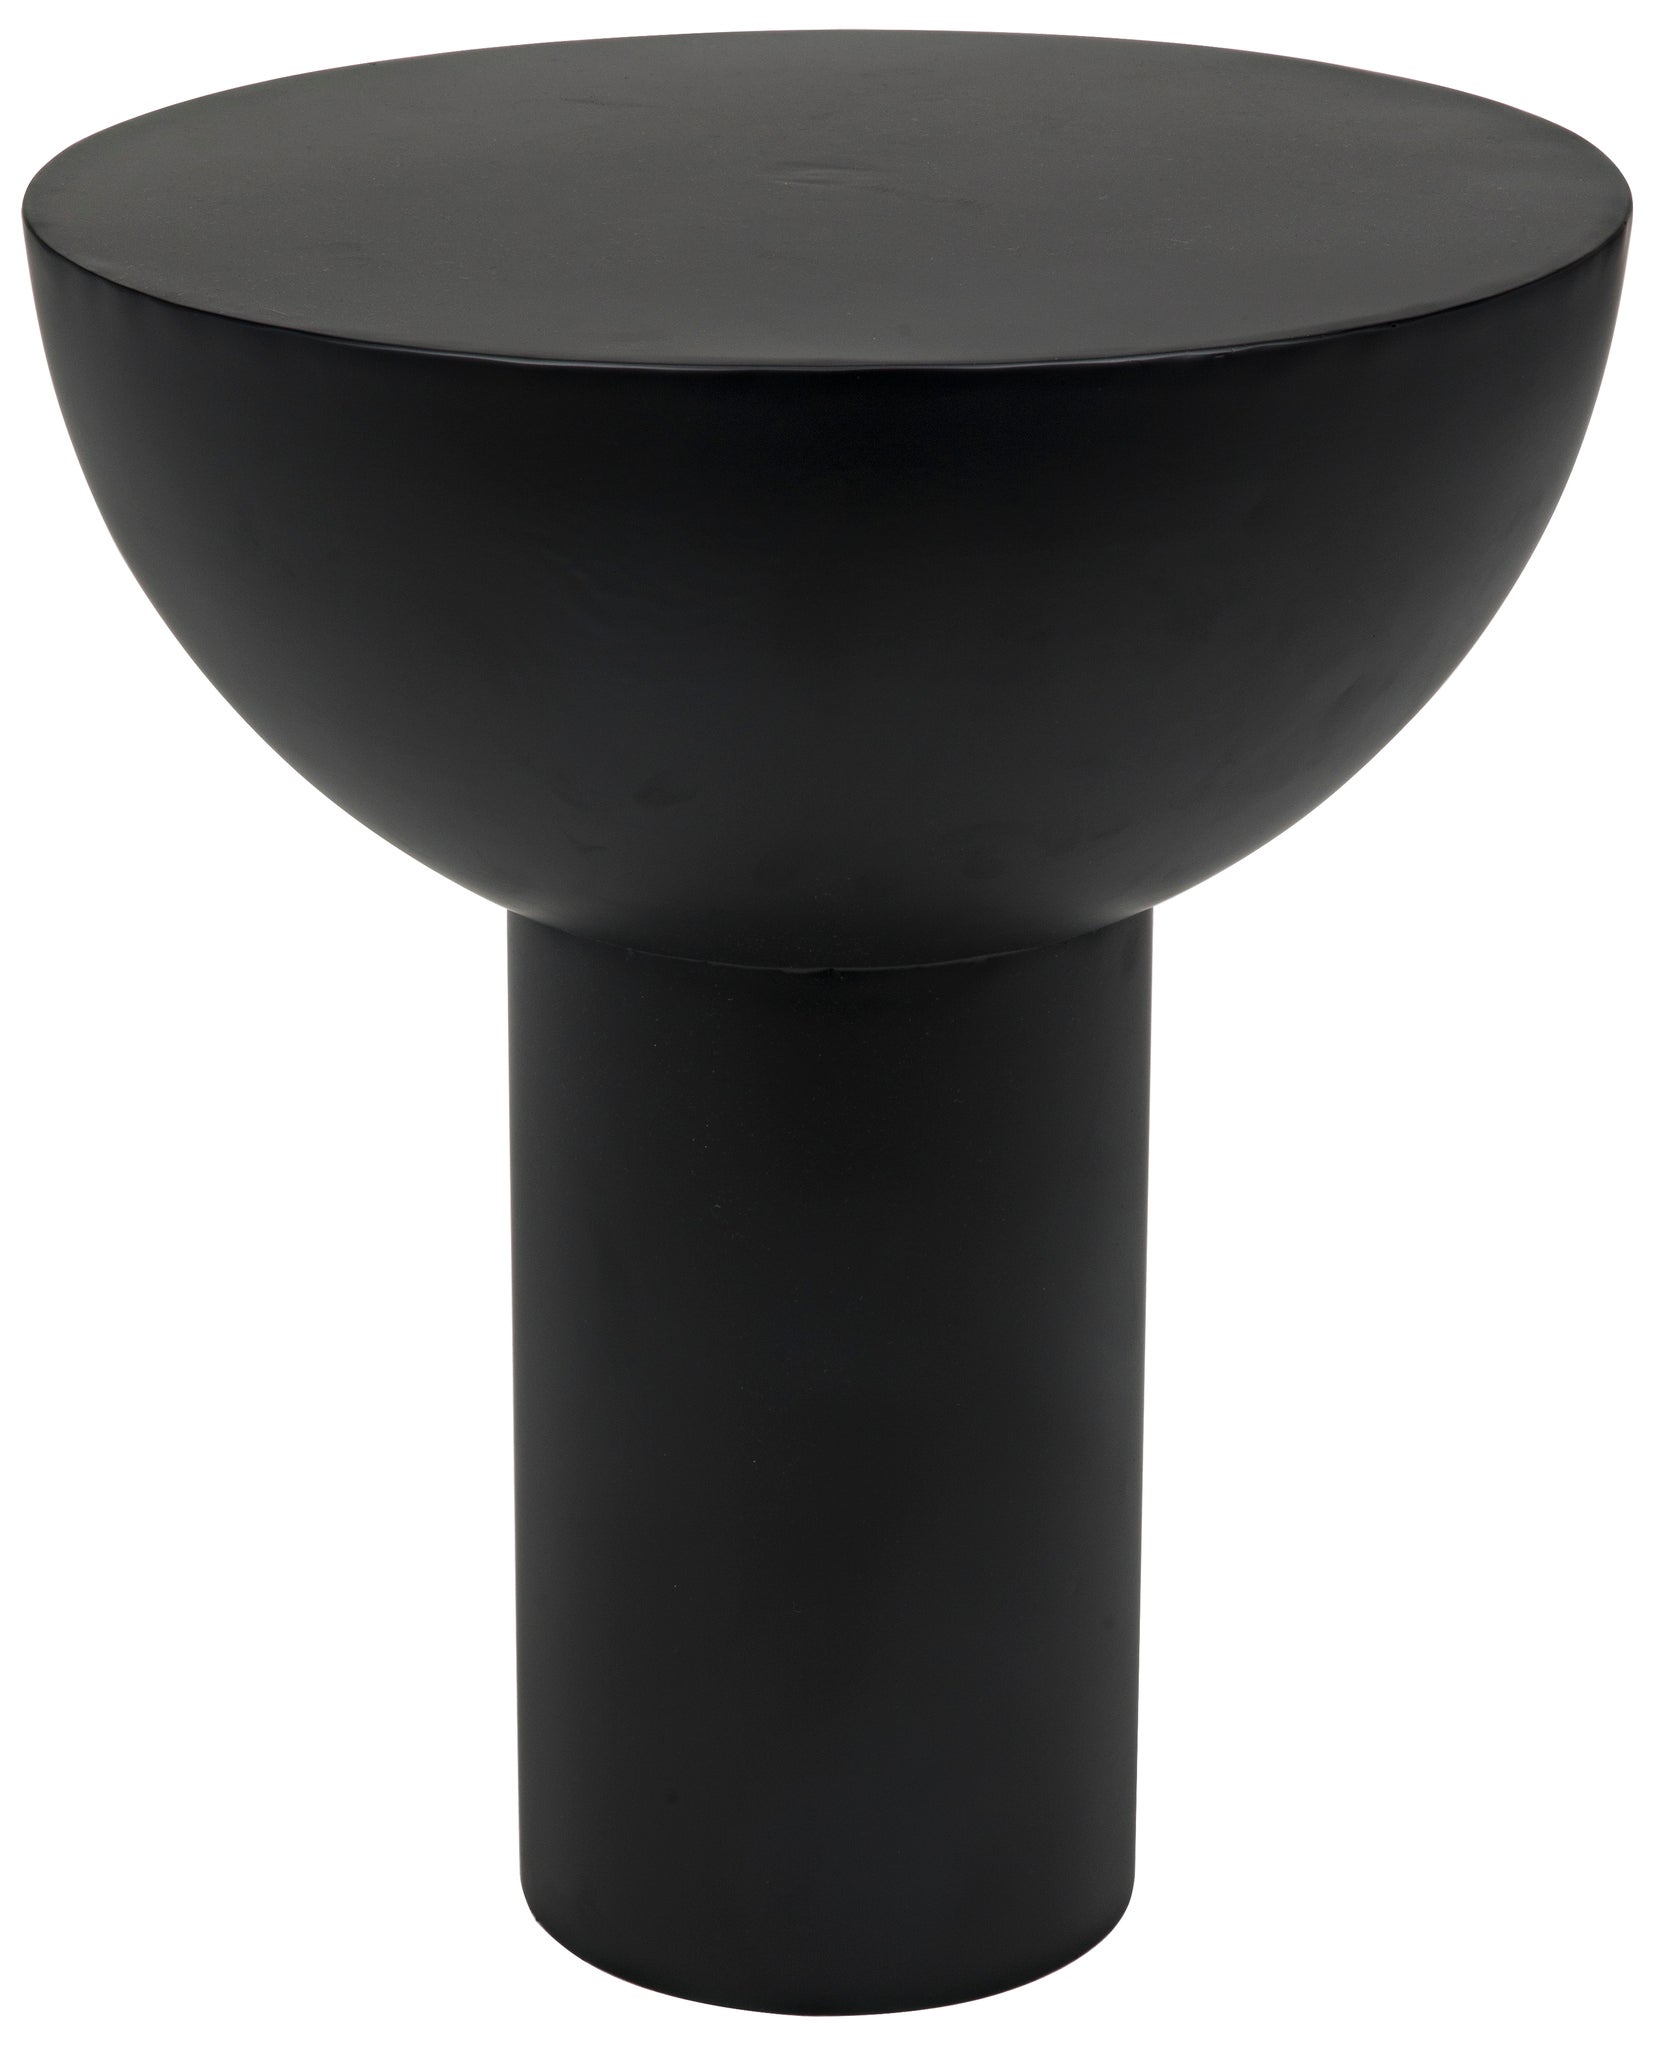 Touchstone Side Table, Black Steel - new items | Noir Trading, Inc.